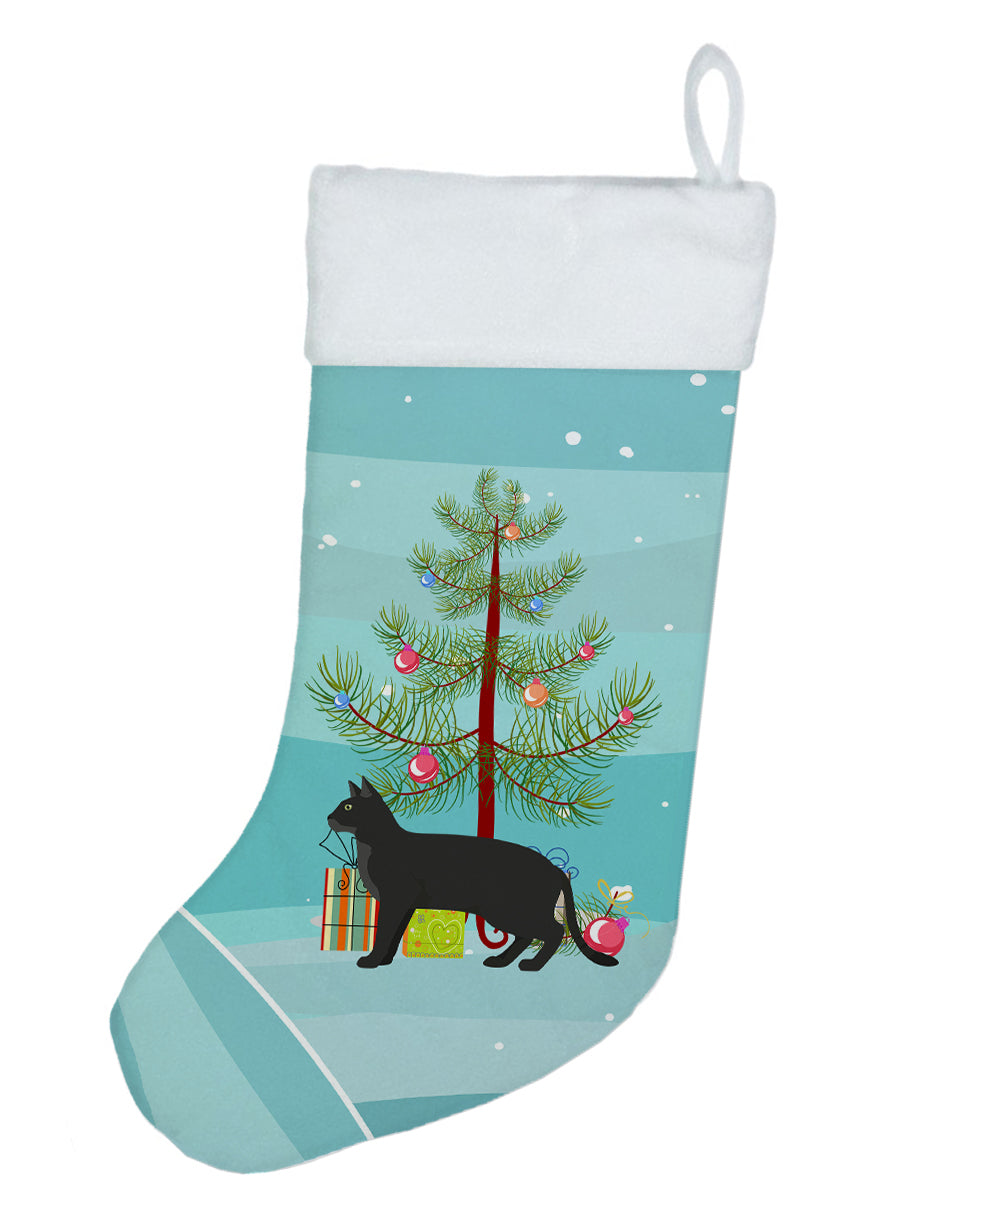 Chausie Black Cat Merry Christmas Christmas Stocking